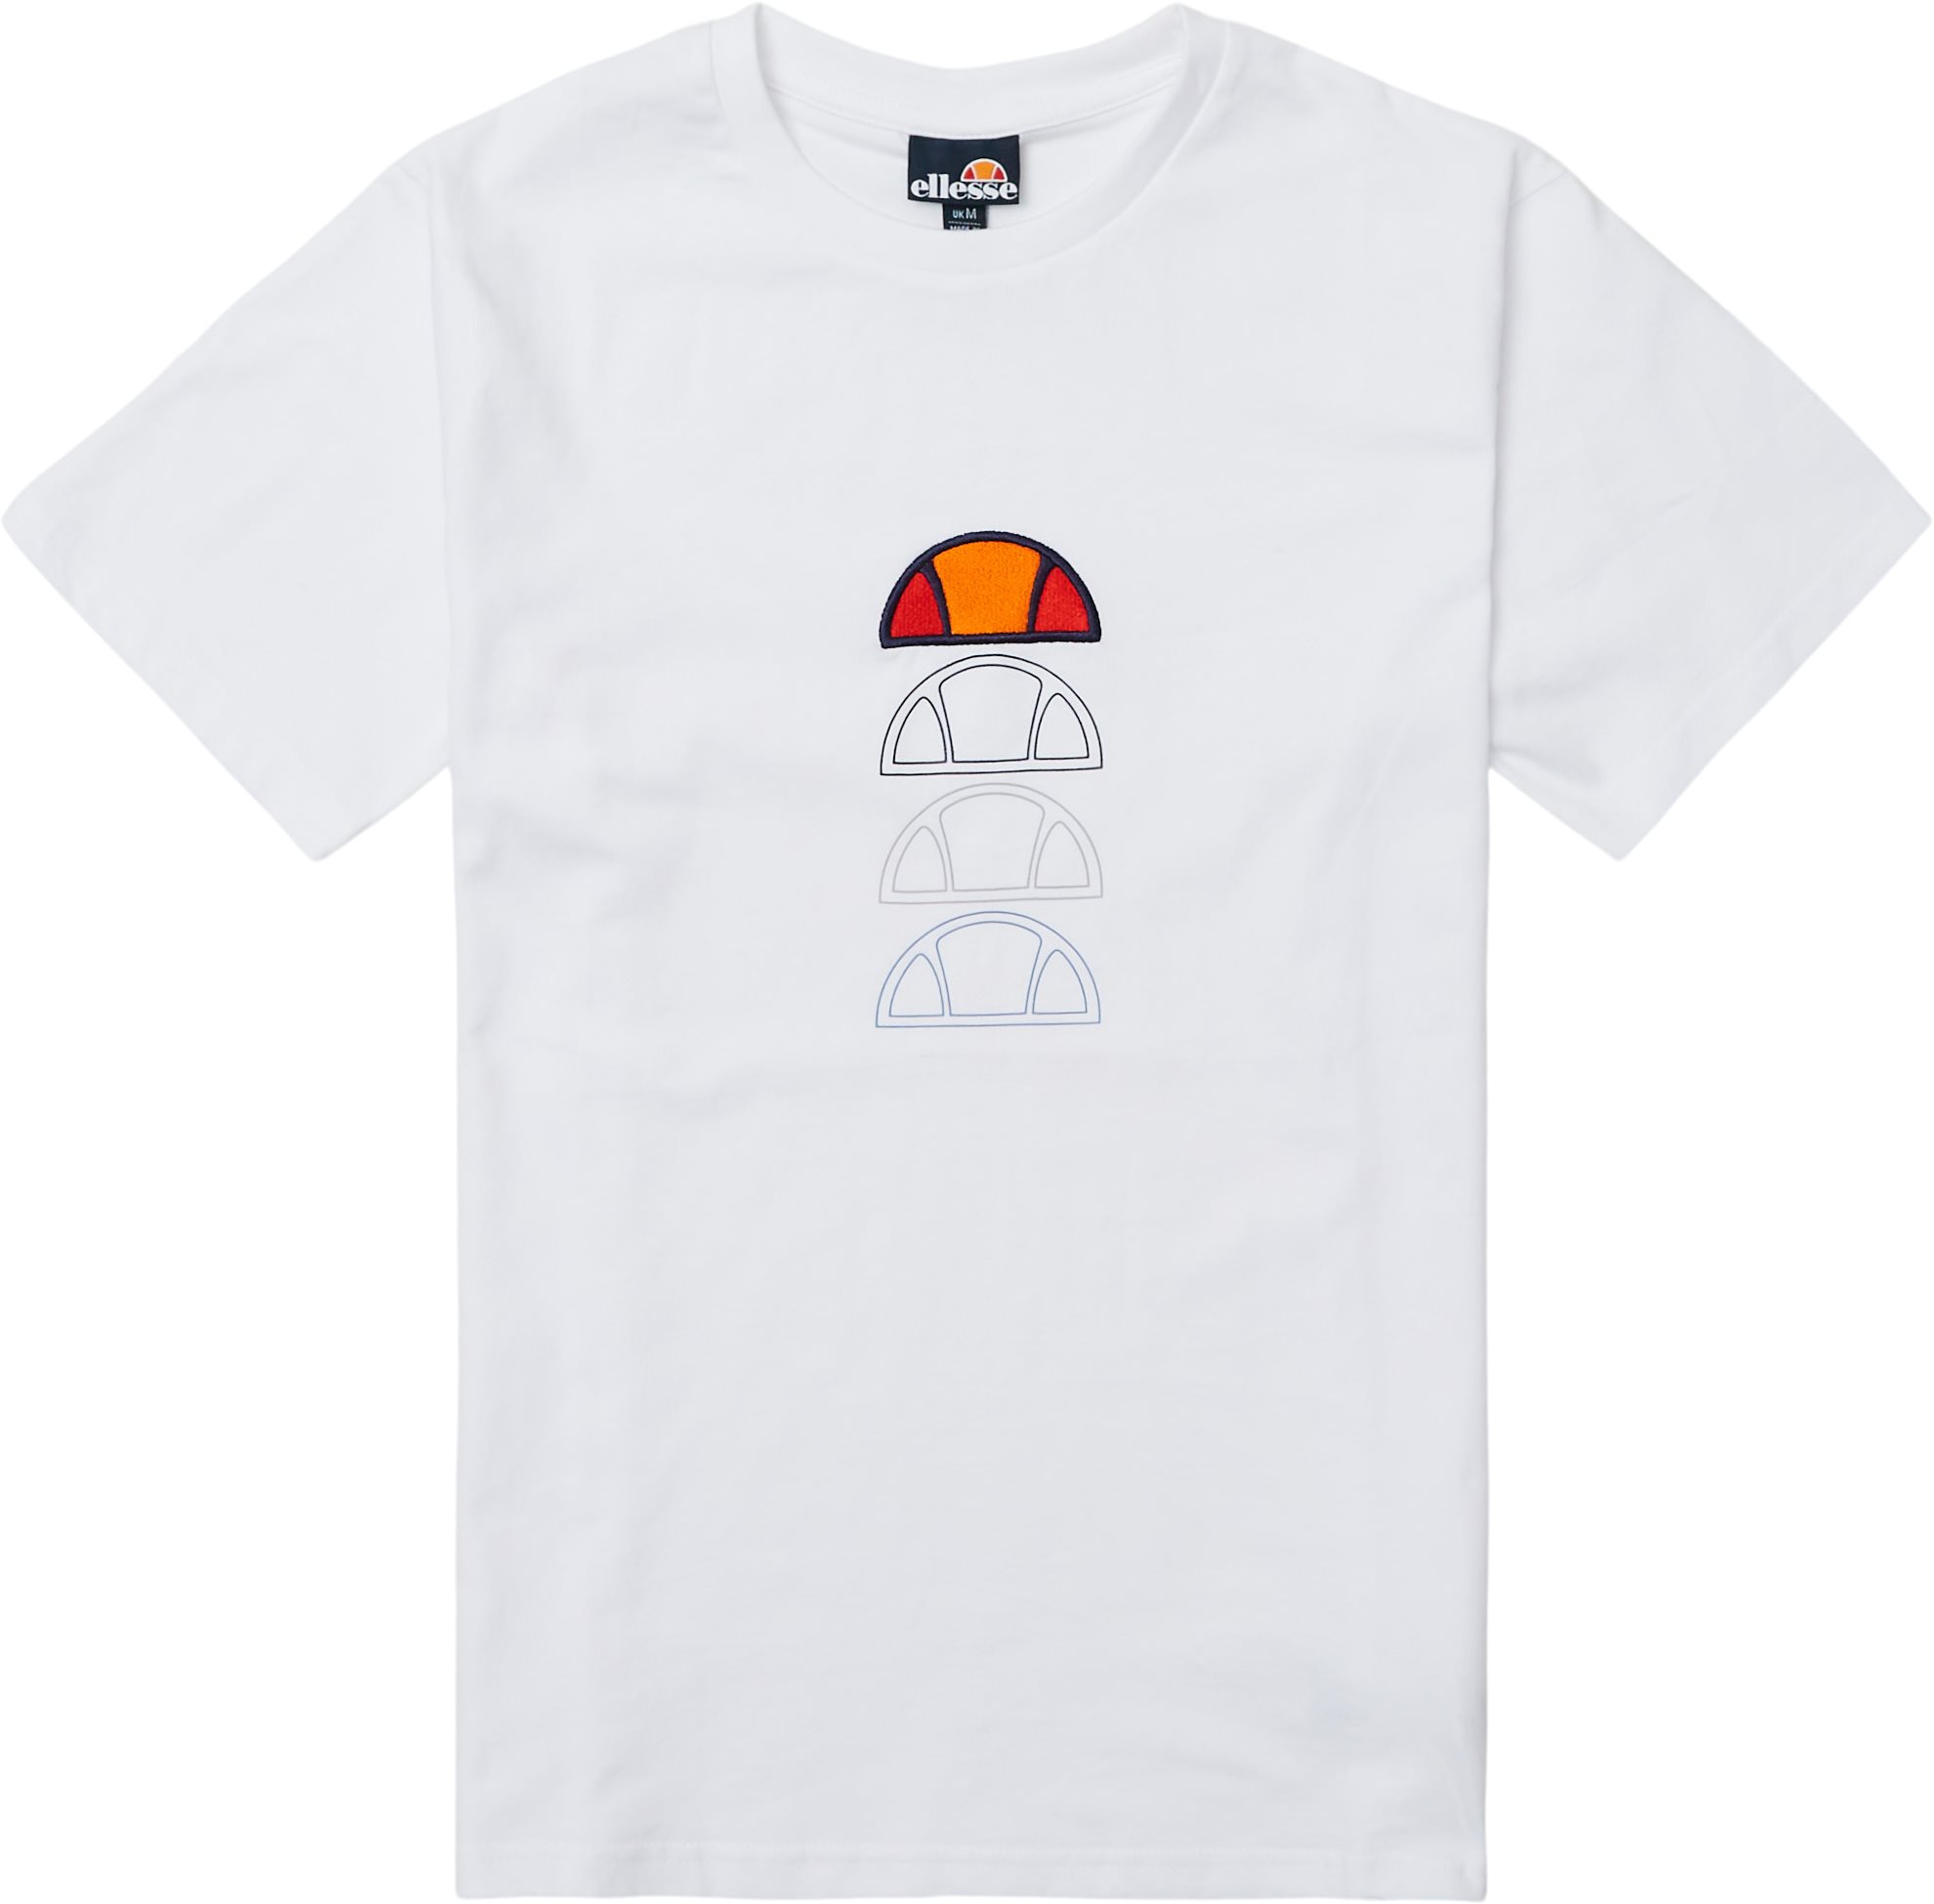 El Verso Tee - T-shirts - Regular fit - White